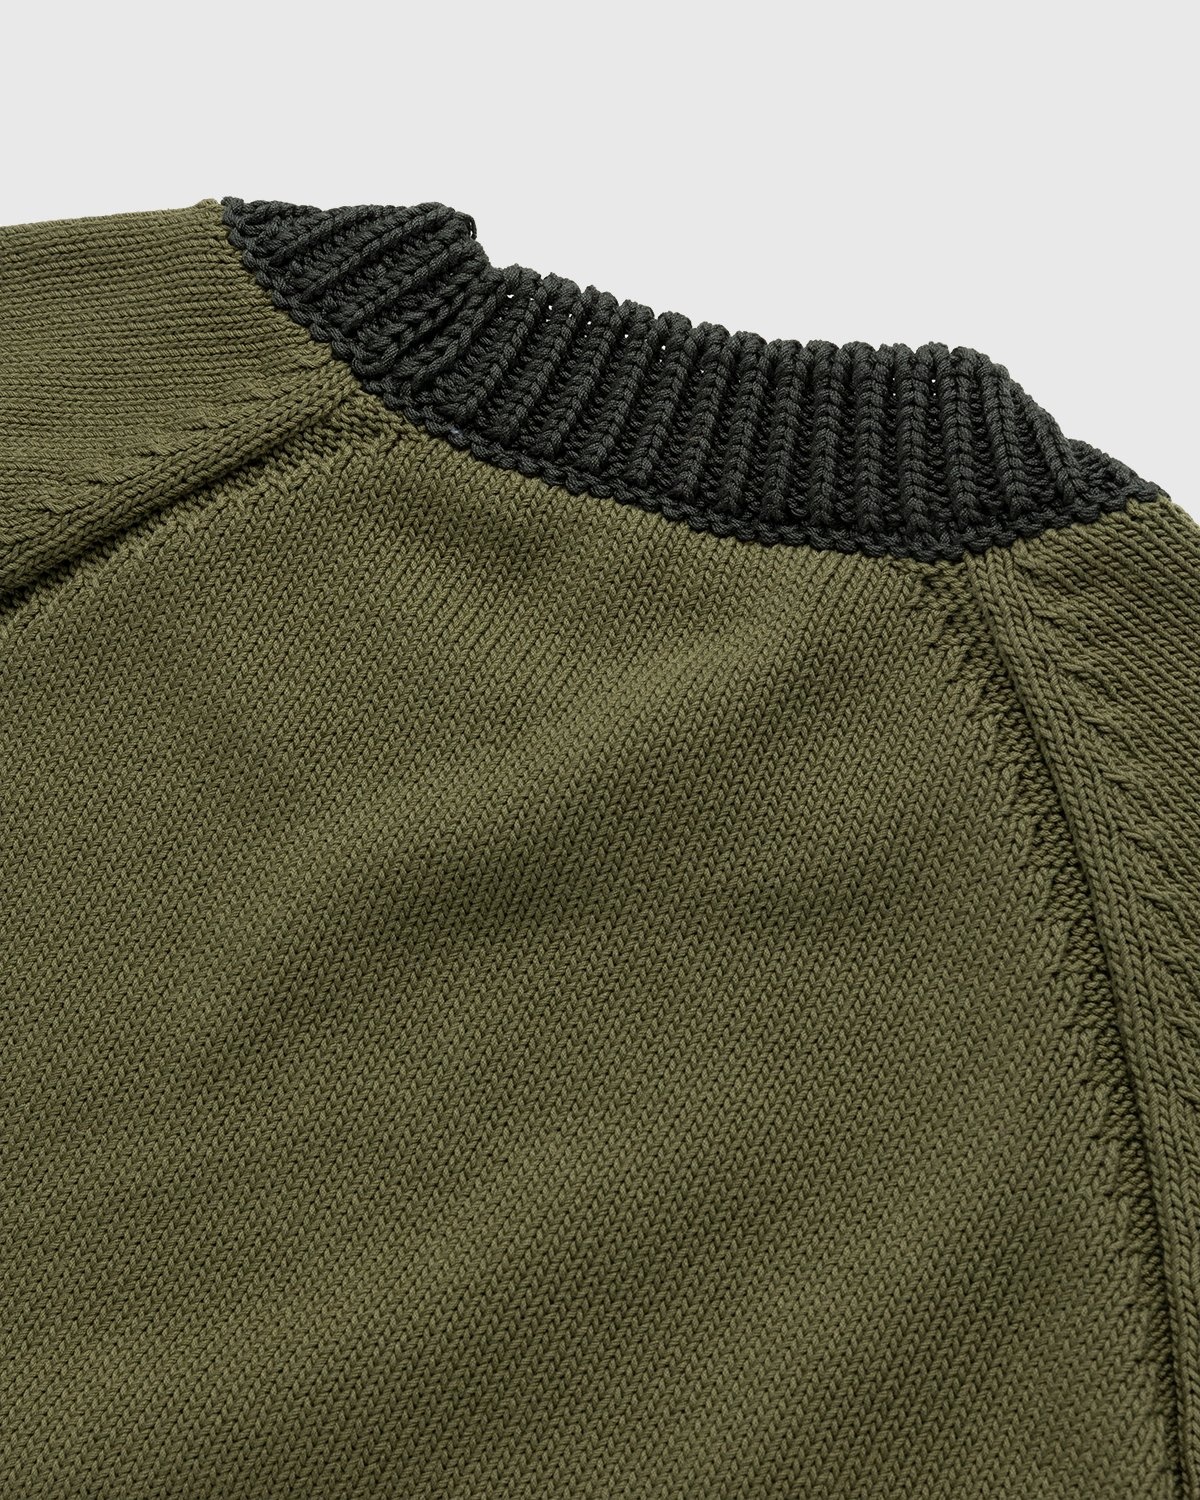 Phipps – Armor Knit Green - Knitwear - Green - Image 5